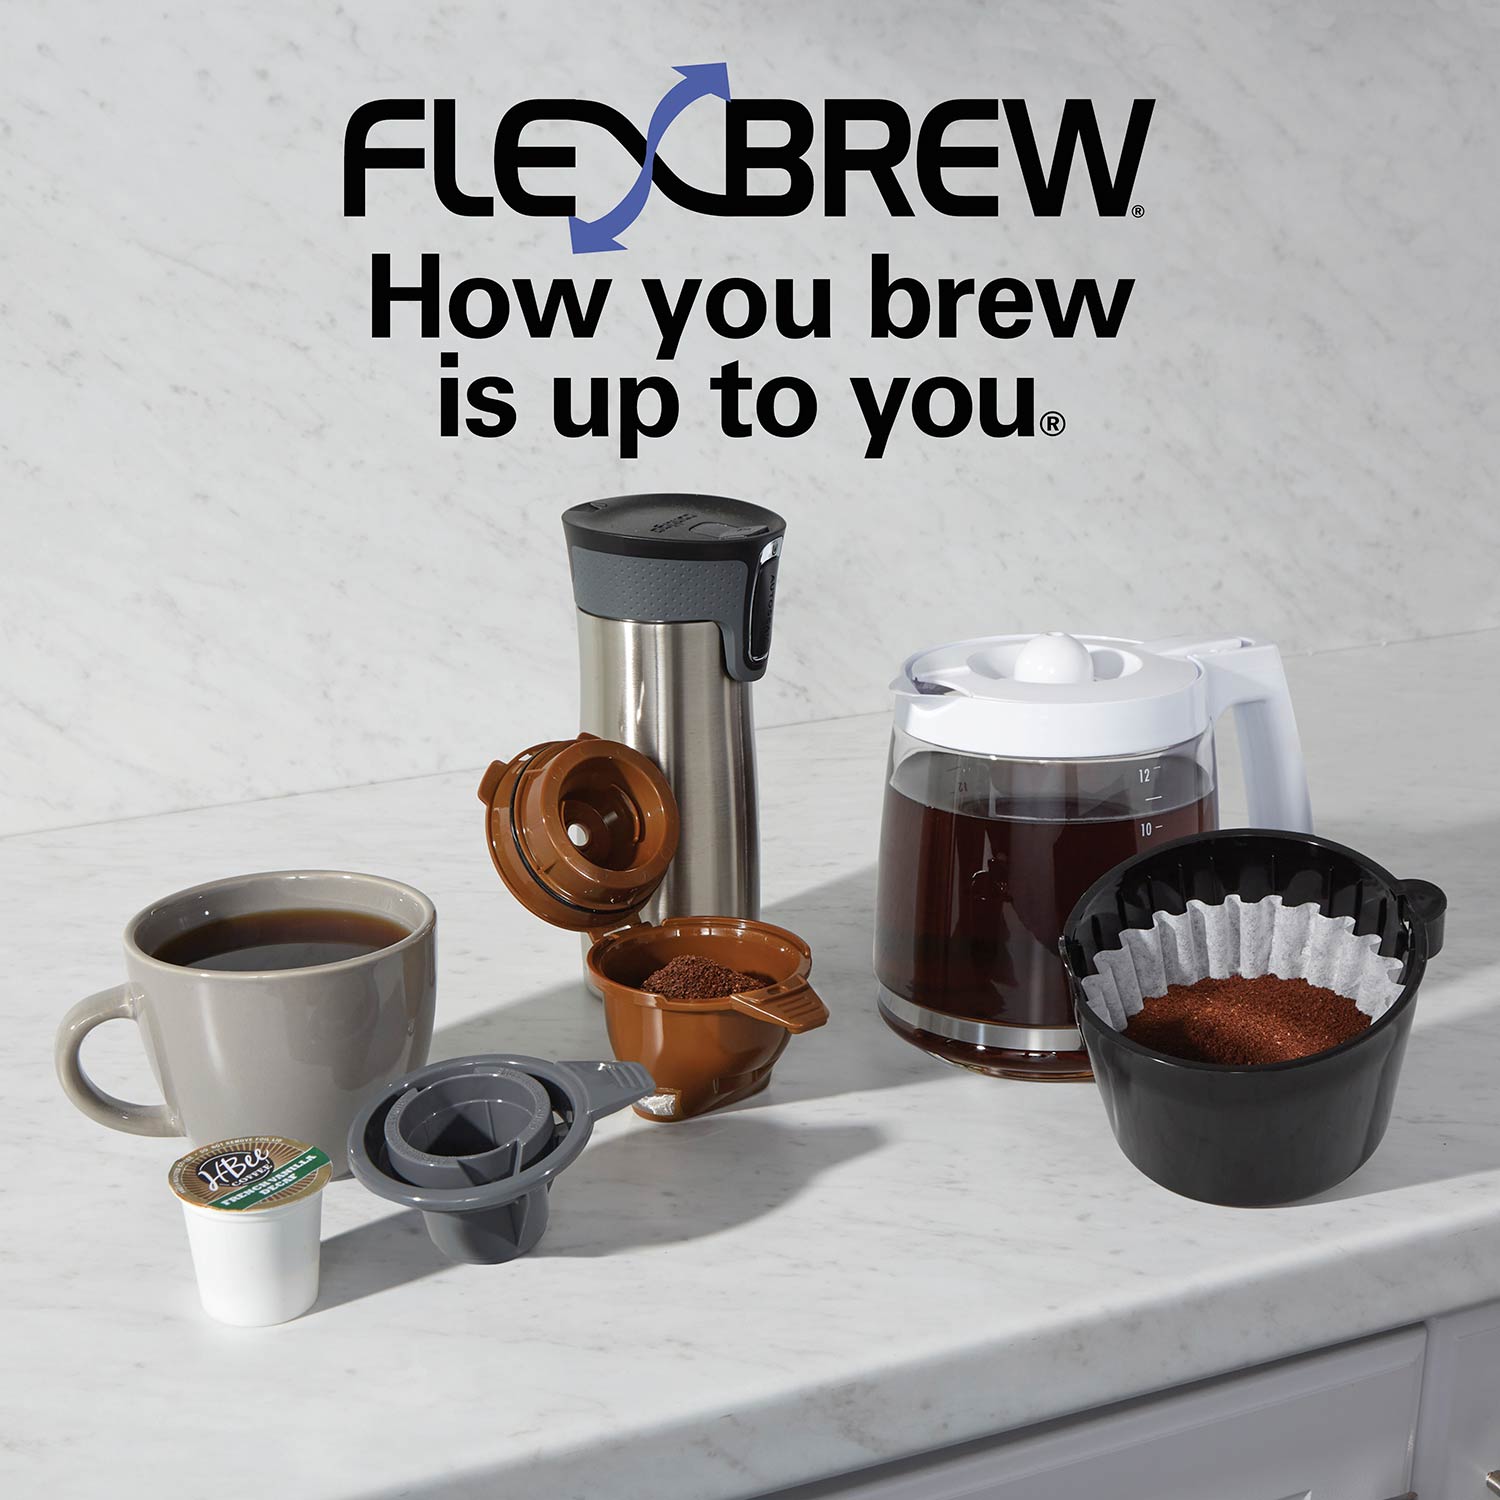 Hamilton Beach FlexBrew Trio Coffee Maker & Single-Serve K-Cup